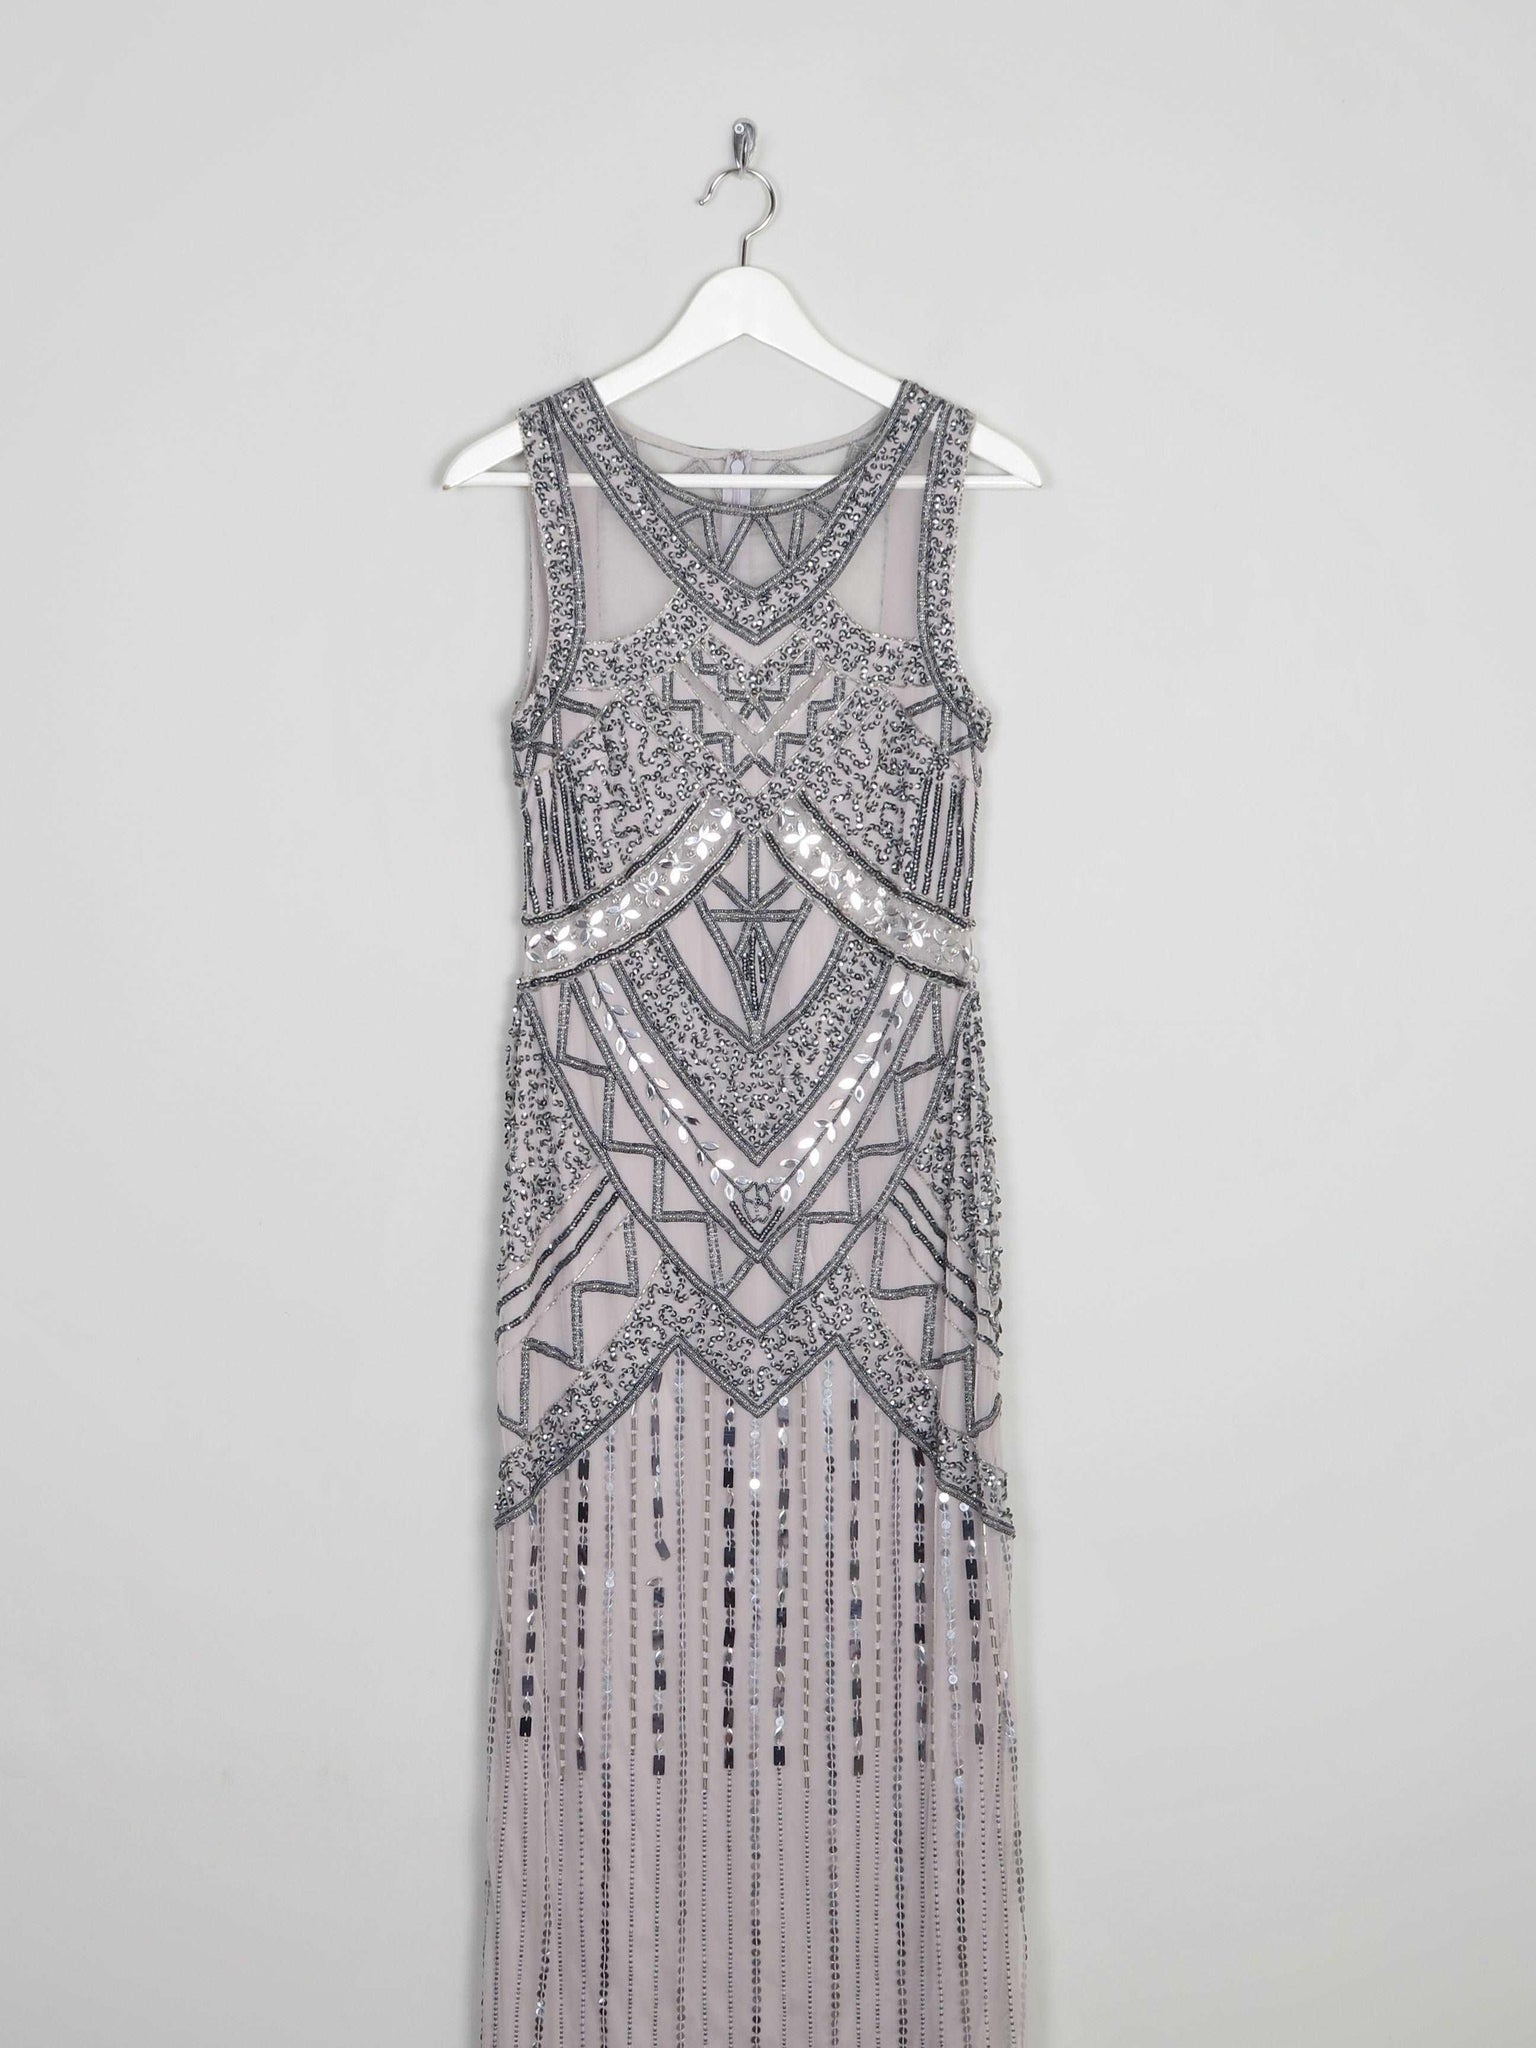 1920s Silver Style Full Length Beaded Evening Dress 10